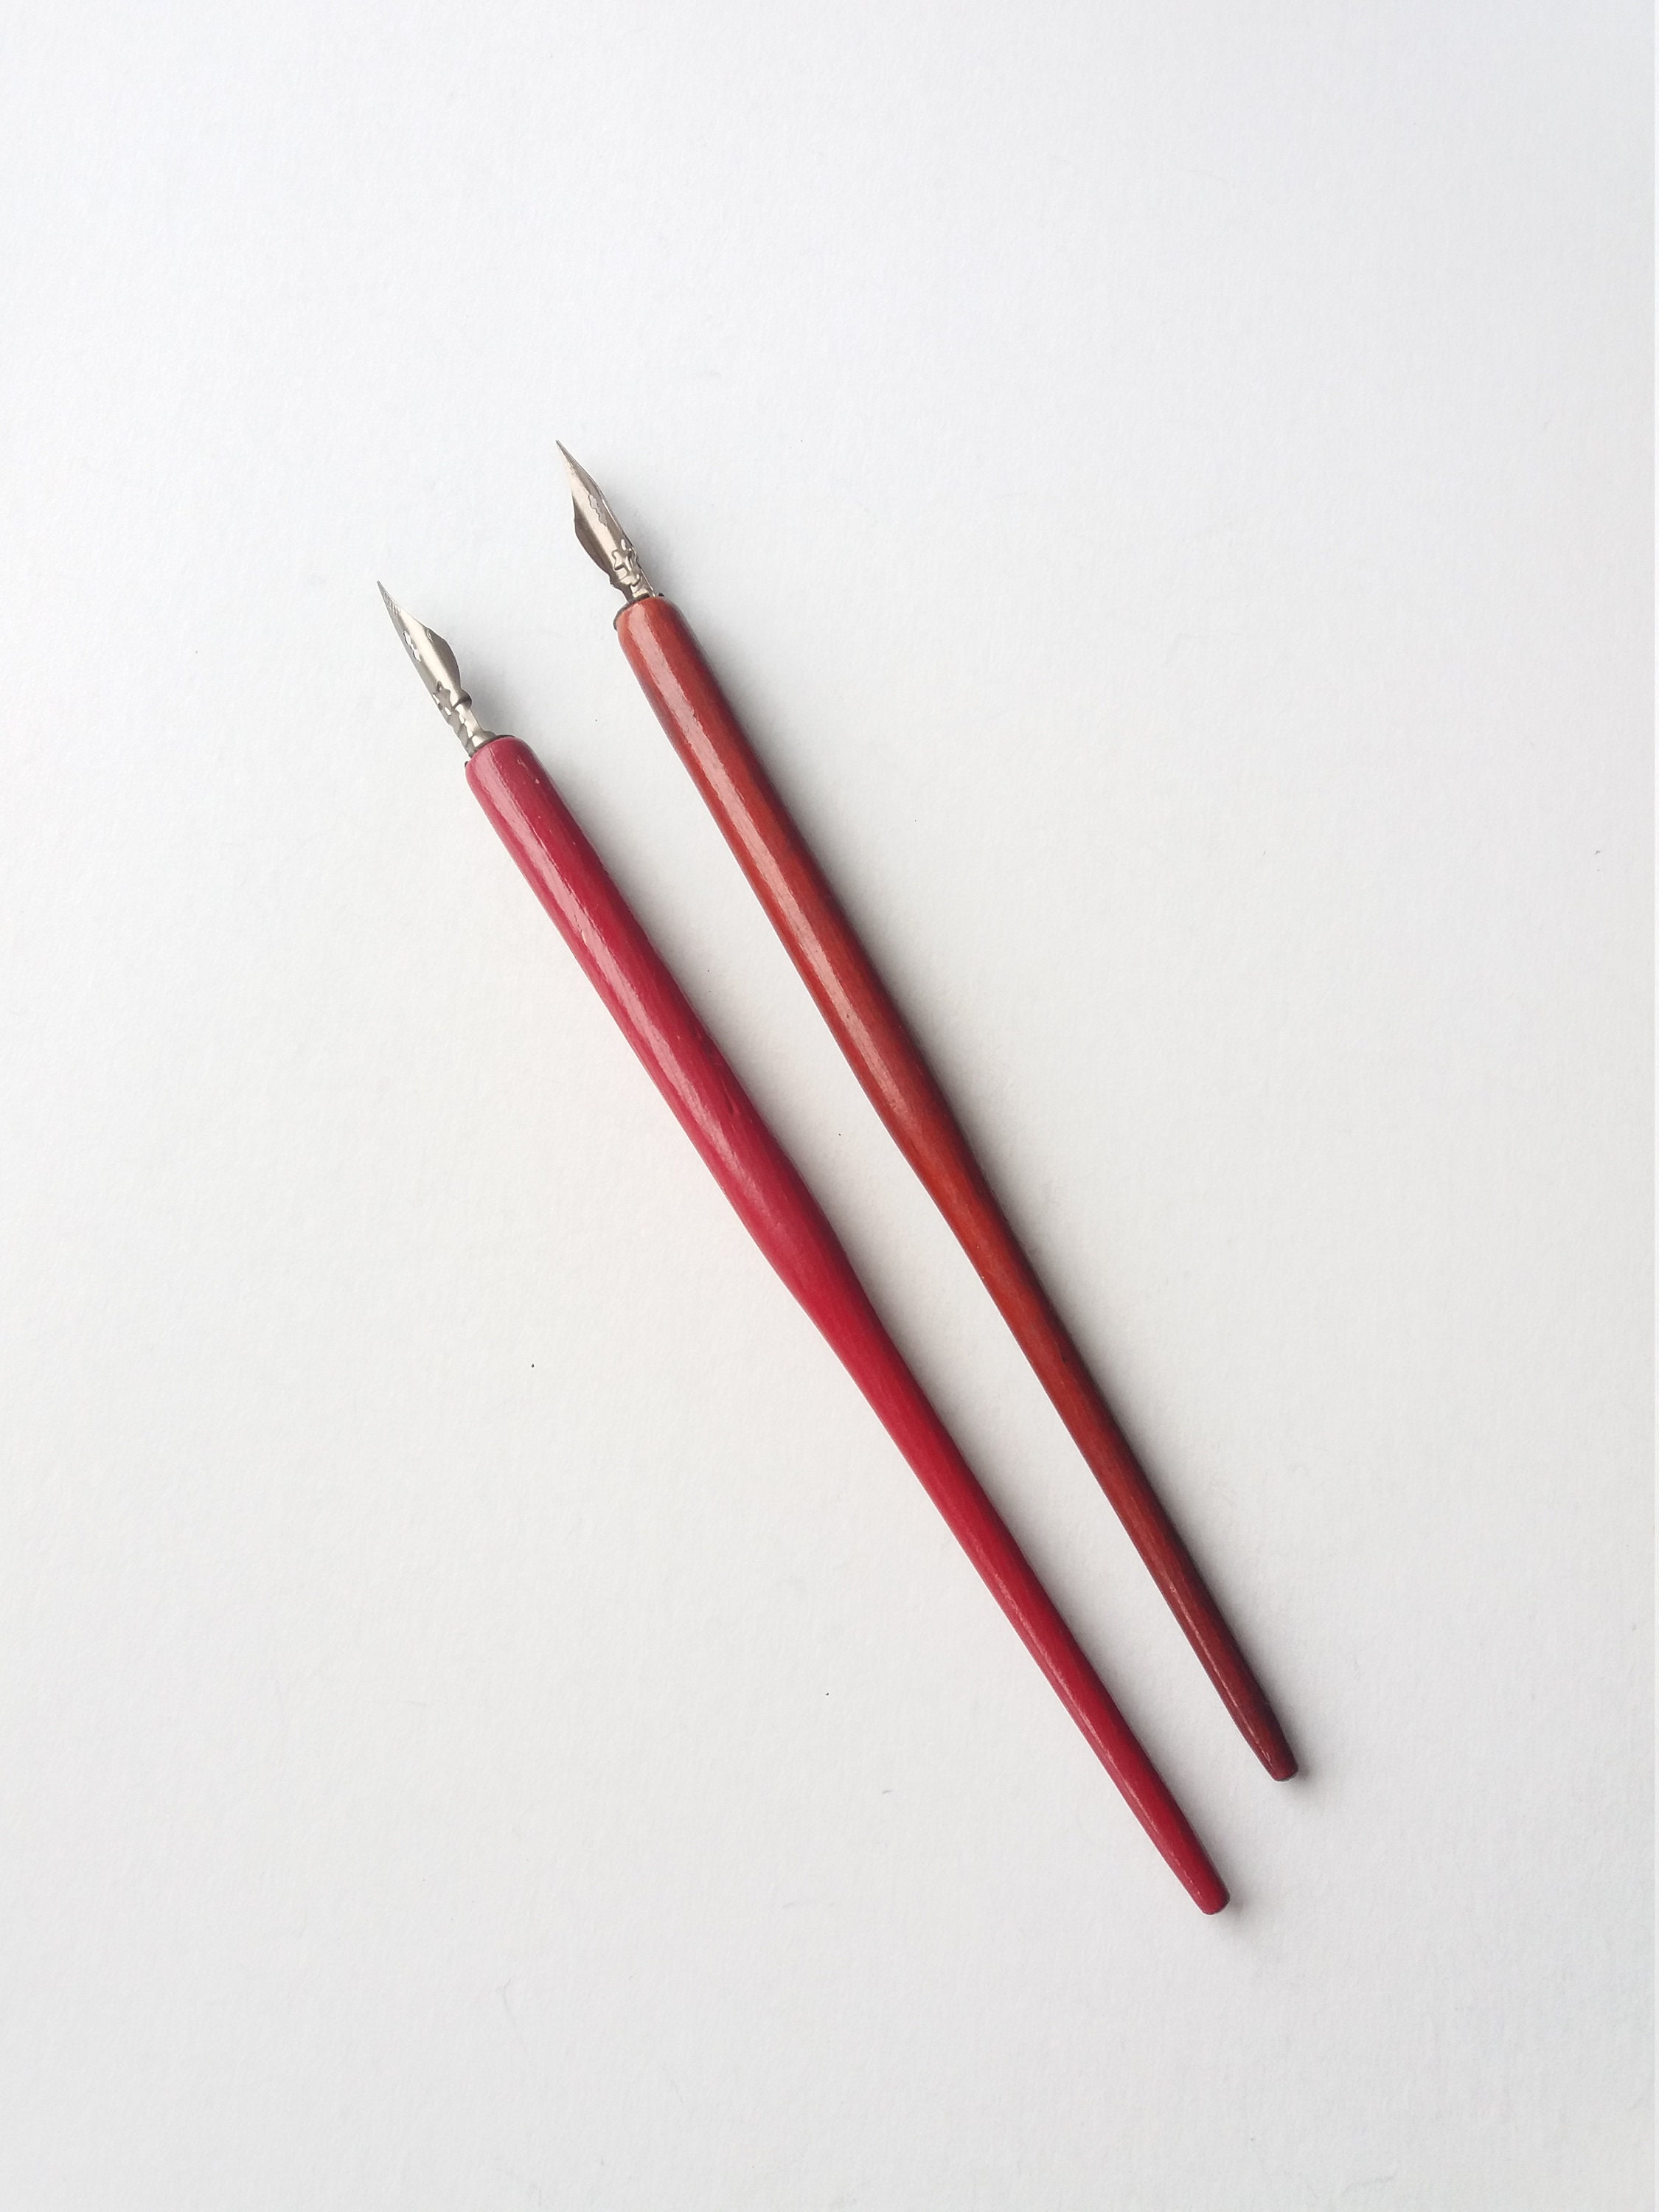 Antique Dip Pen Ink, Vintage Red Pen Wooden Handle, Calligraphy